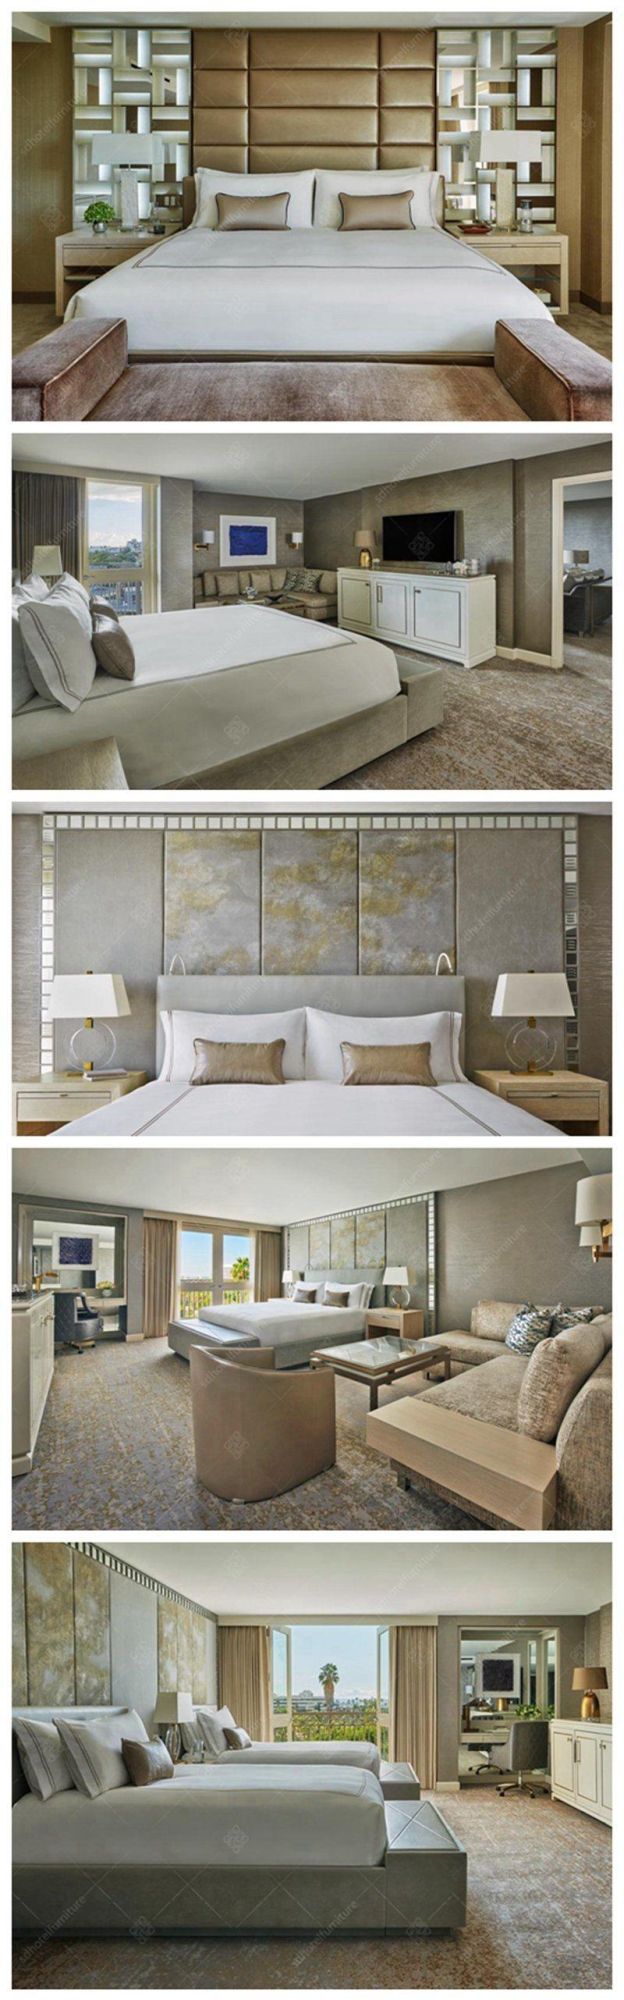 Used Dubai Leather Hotel King Size Bedroom Furniture